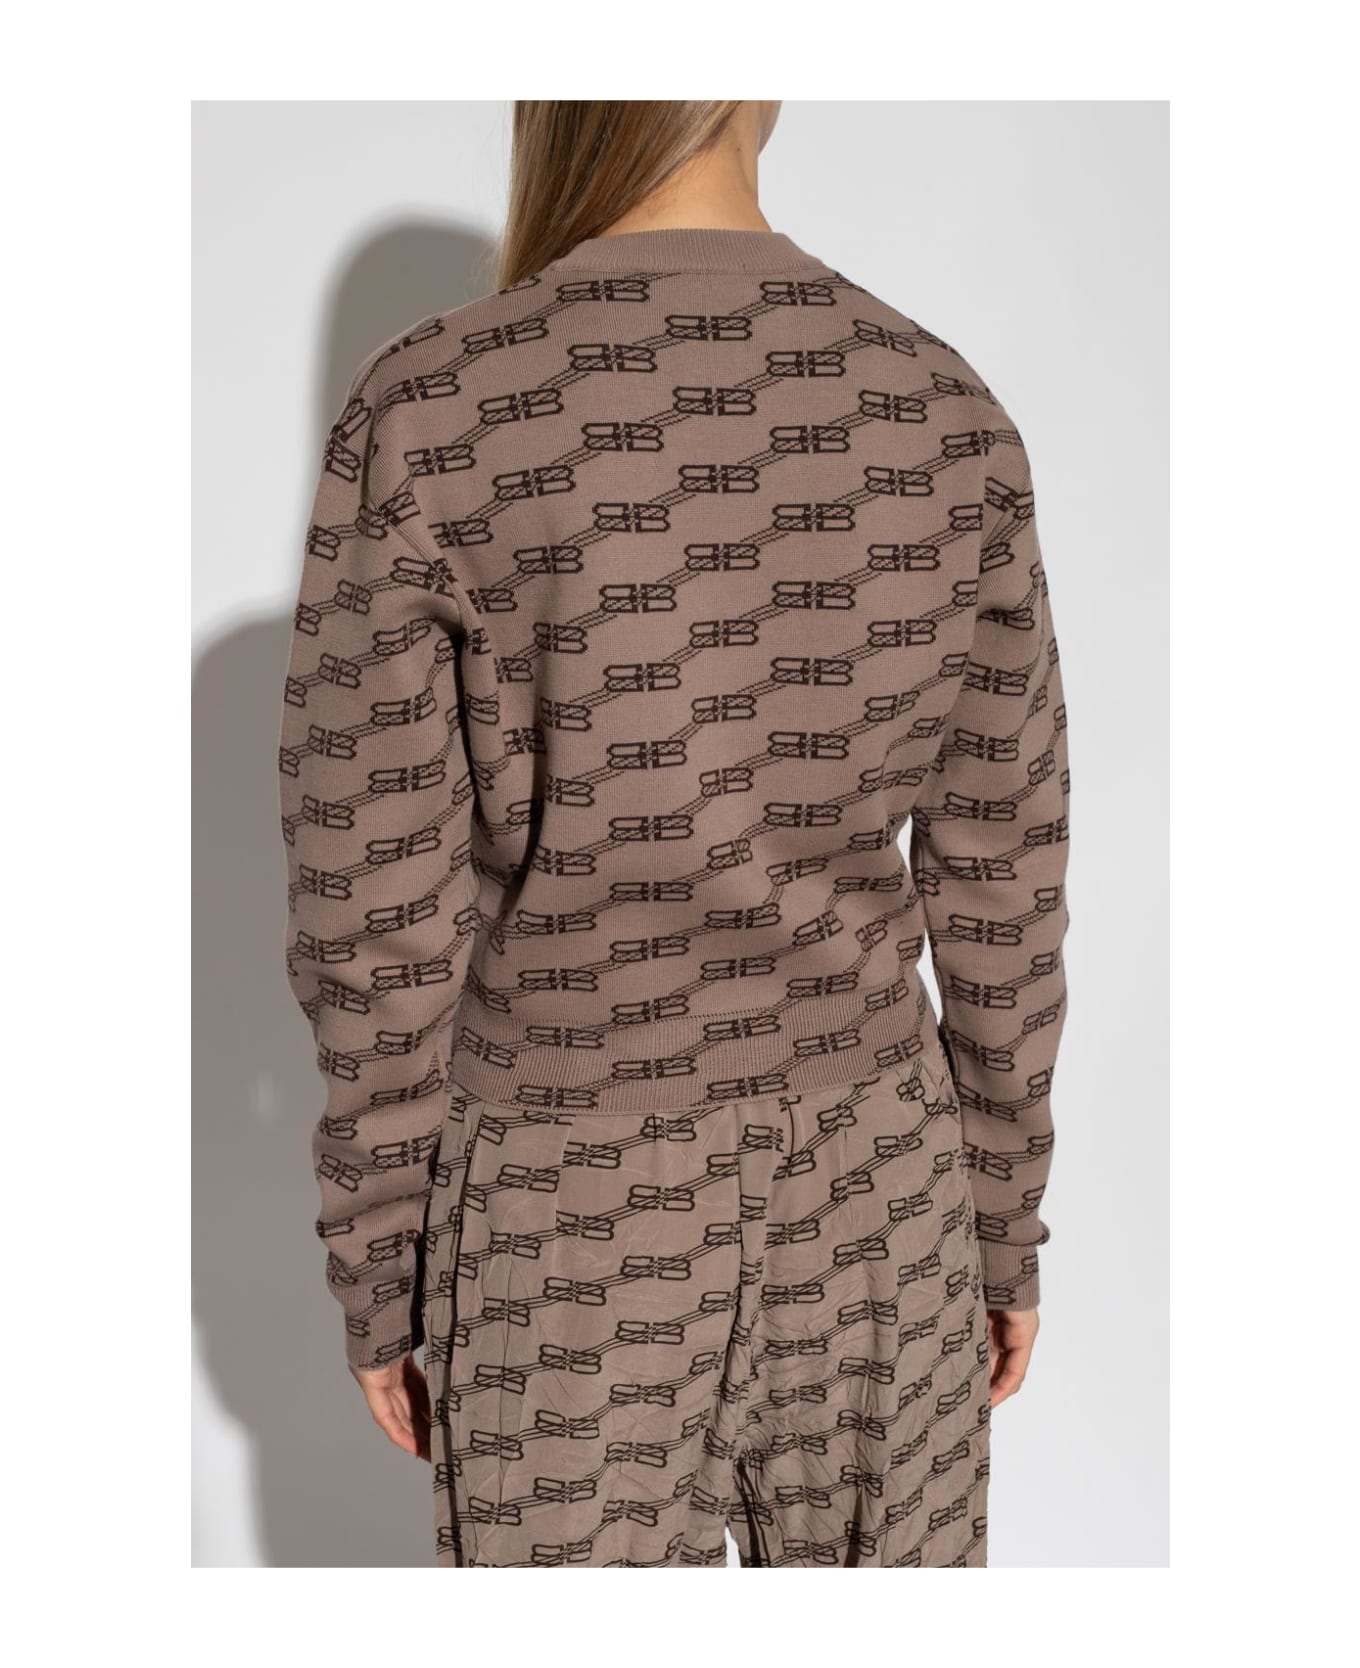 Balenciaga Sweater With Monogram - Beige/brown